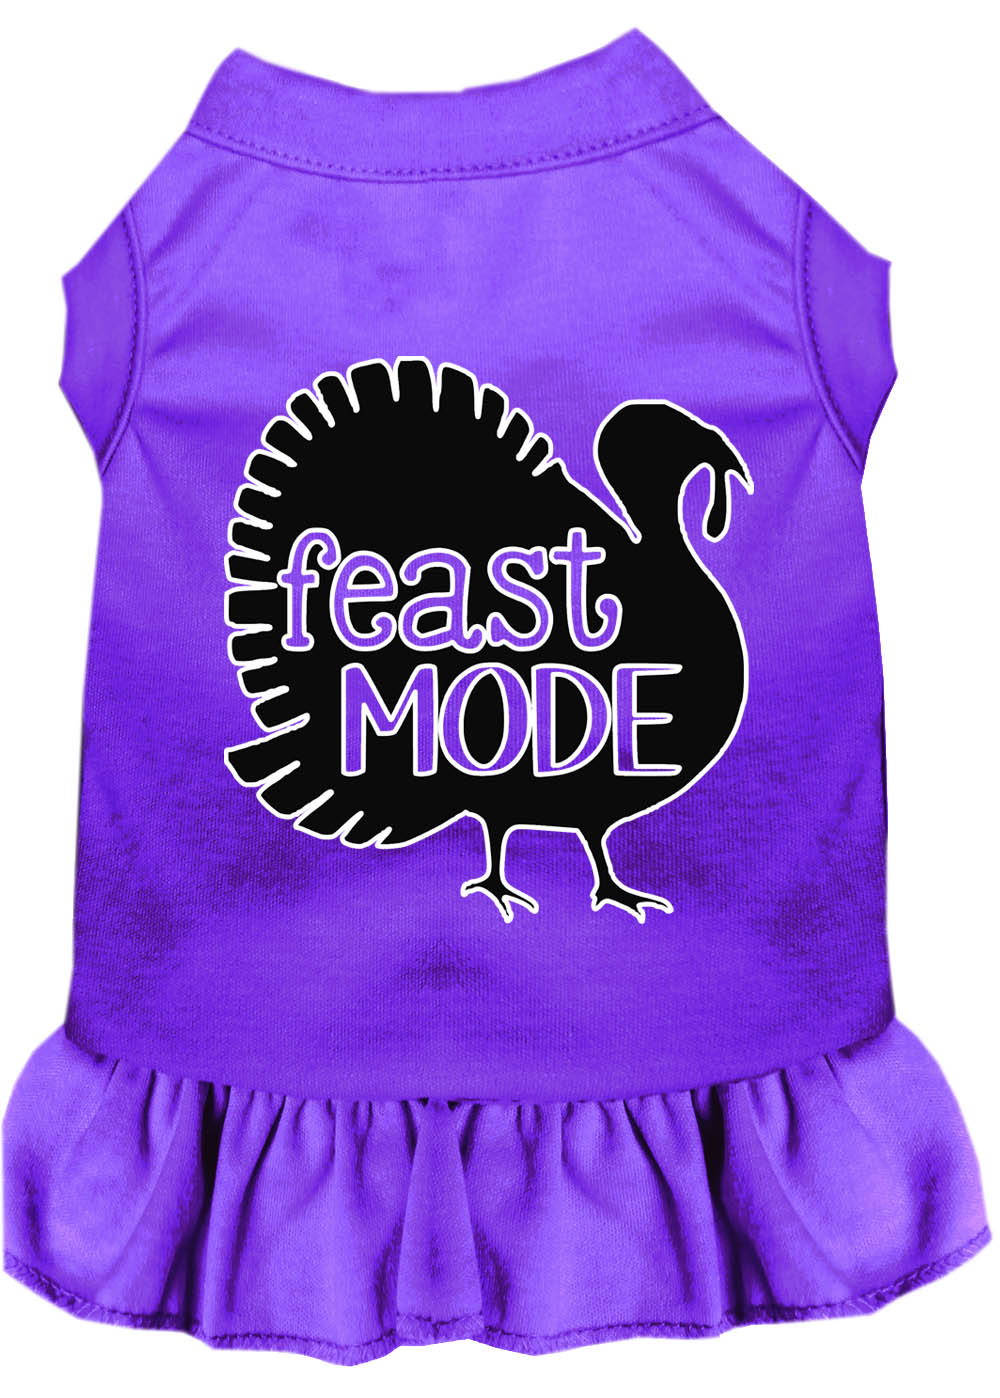 Feast Mode Screen Print Dog Dress Purple XS